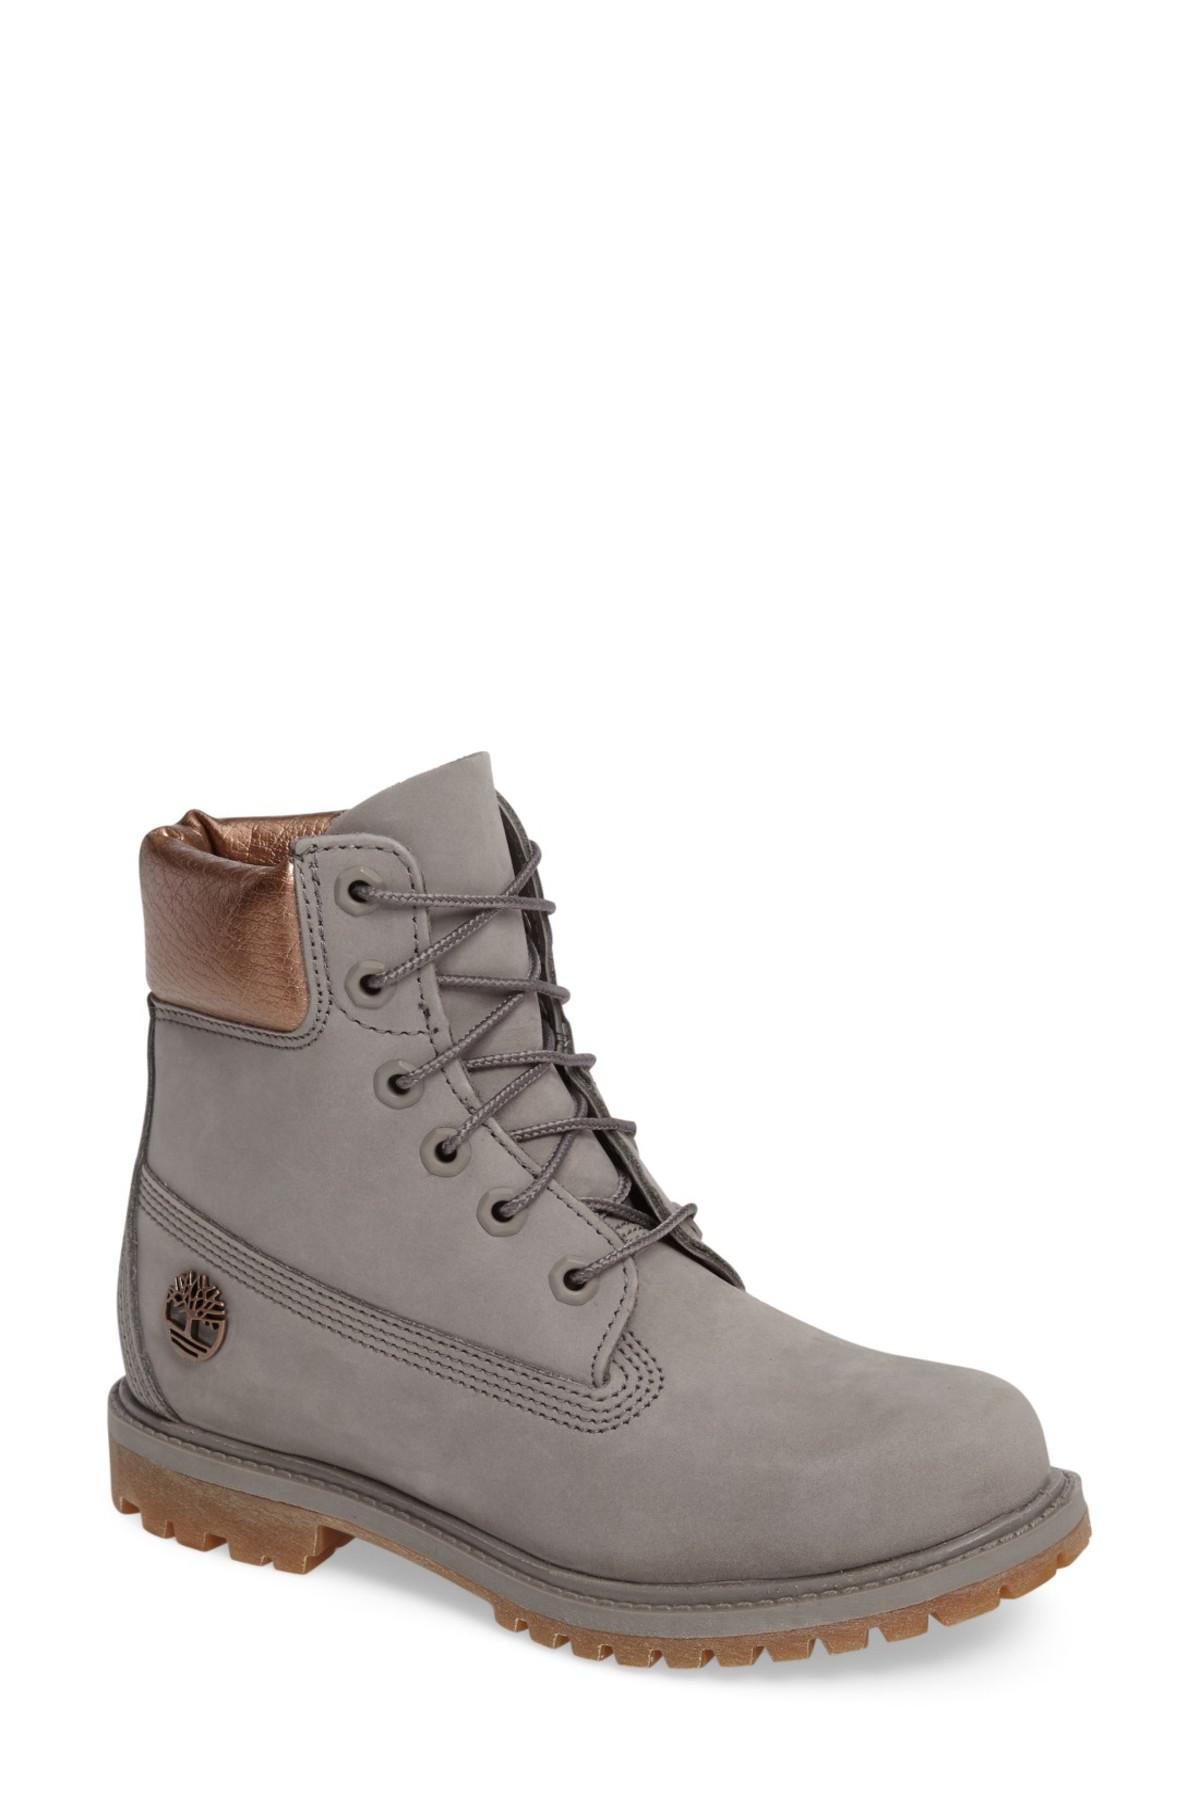 Timberland Leather 6 Inch Premium Metallic Waterproof Boot (women) in Grey  Nubuck Leather (Gray) - Lyst